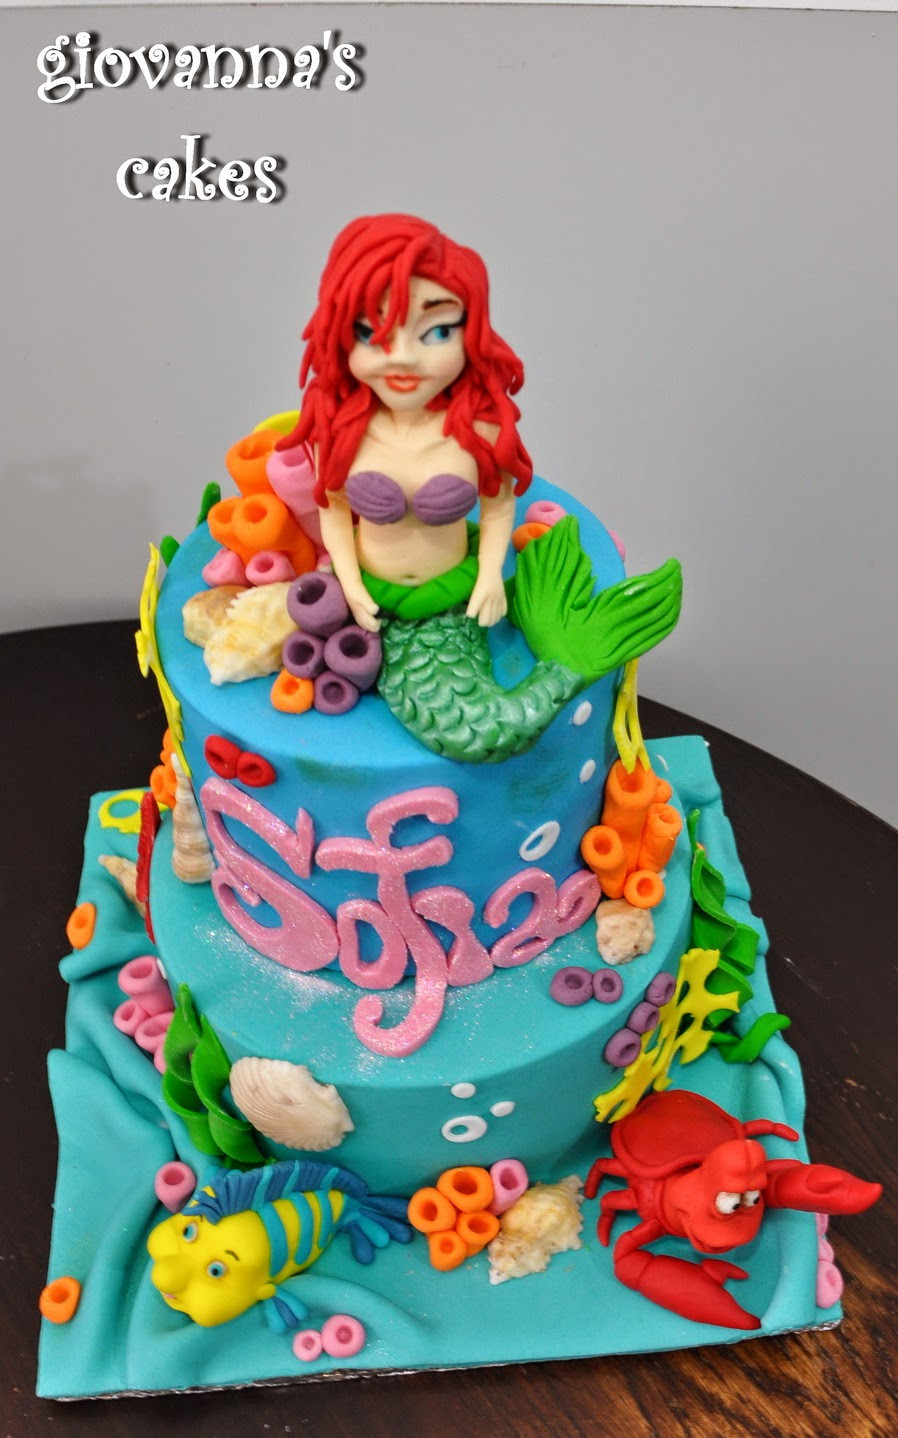 Ariel Birthday Cake
 giovanna s cakes The little mermaid themed birthday cake